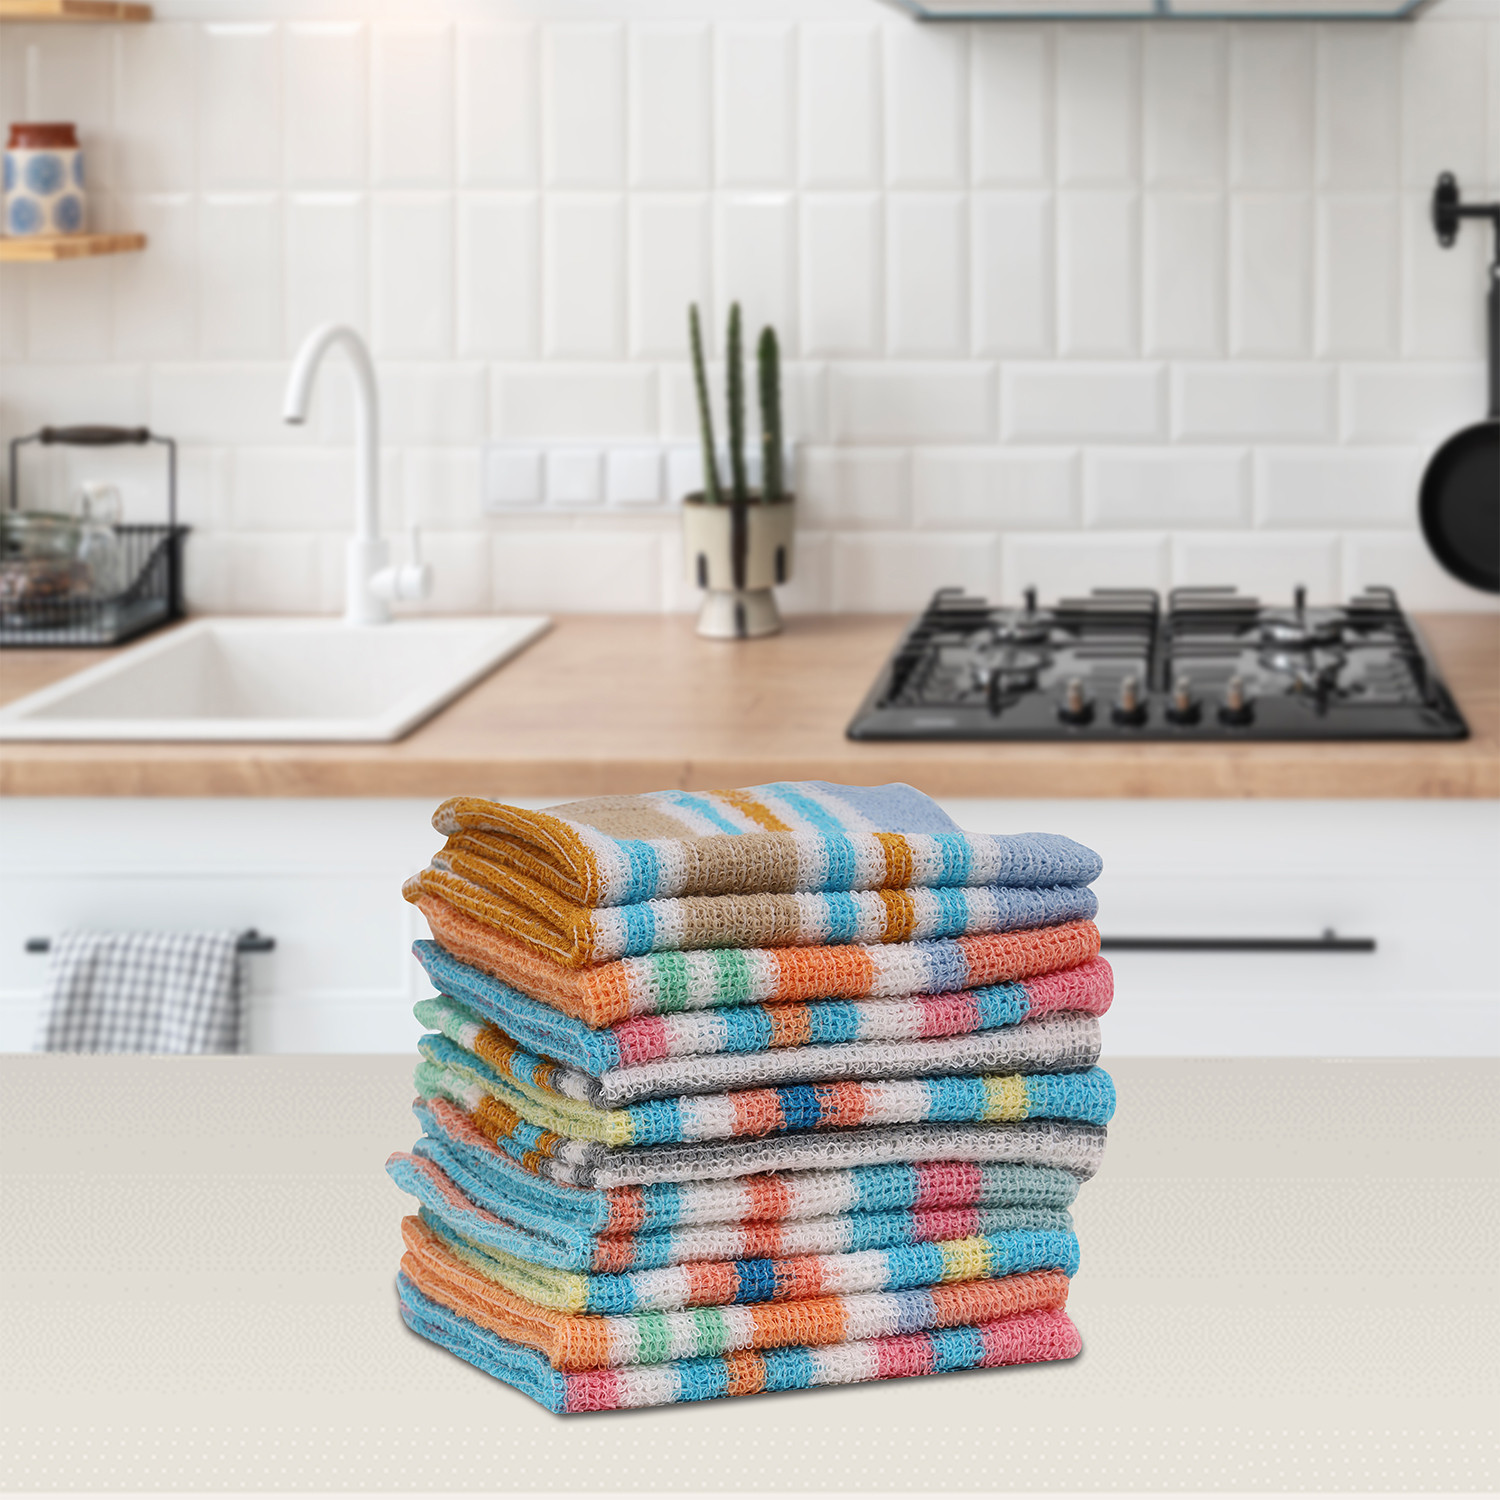 Kuber Industries Towel Handkerchief | Cotton Face Towel | Face Towel | Sweat Absorbent Handkerchief | Unisex Multi Lining Hanky | Face Towel Hankies | Set of 6 | Multicolor